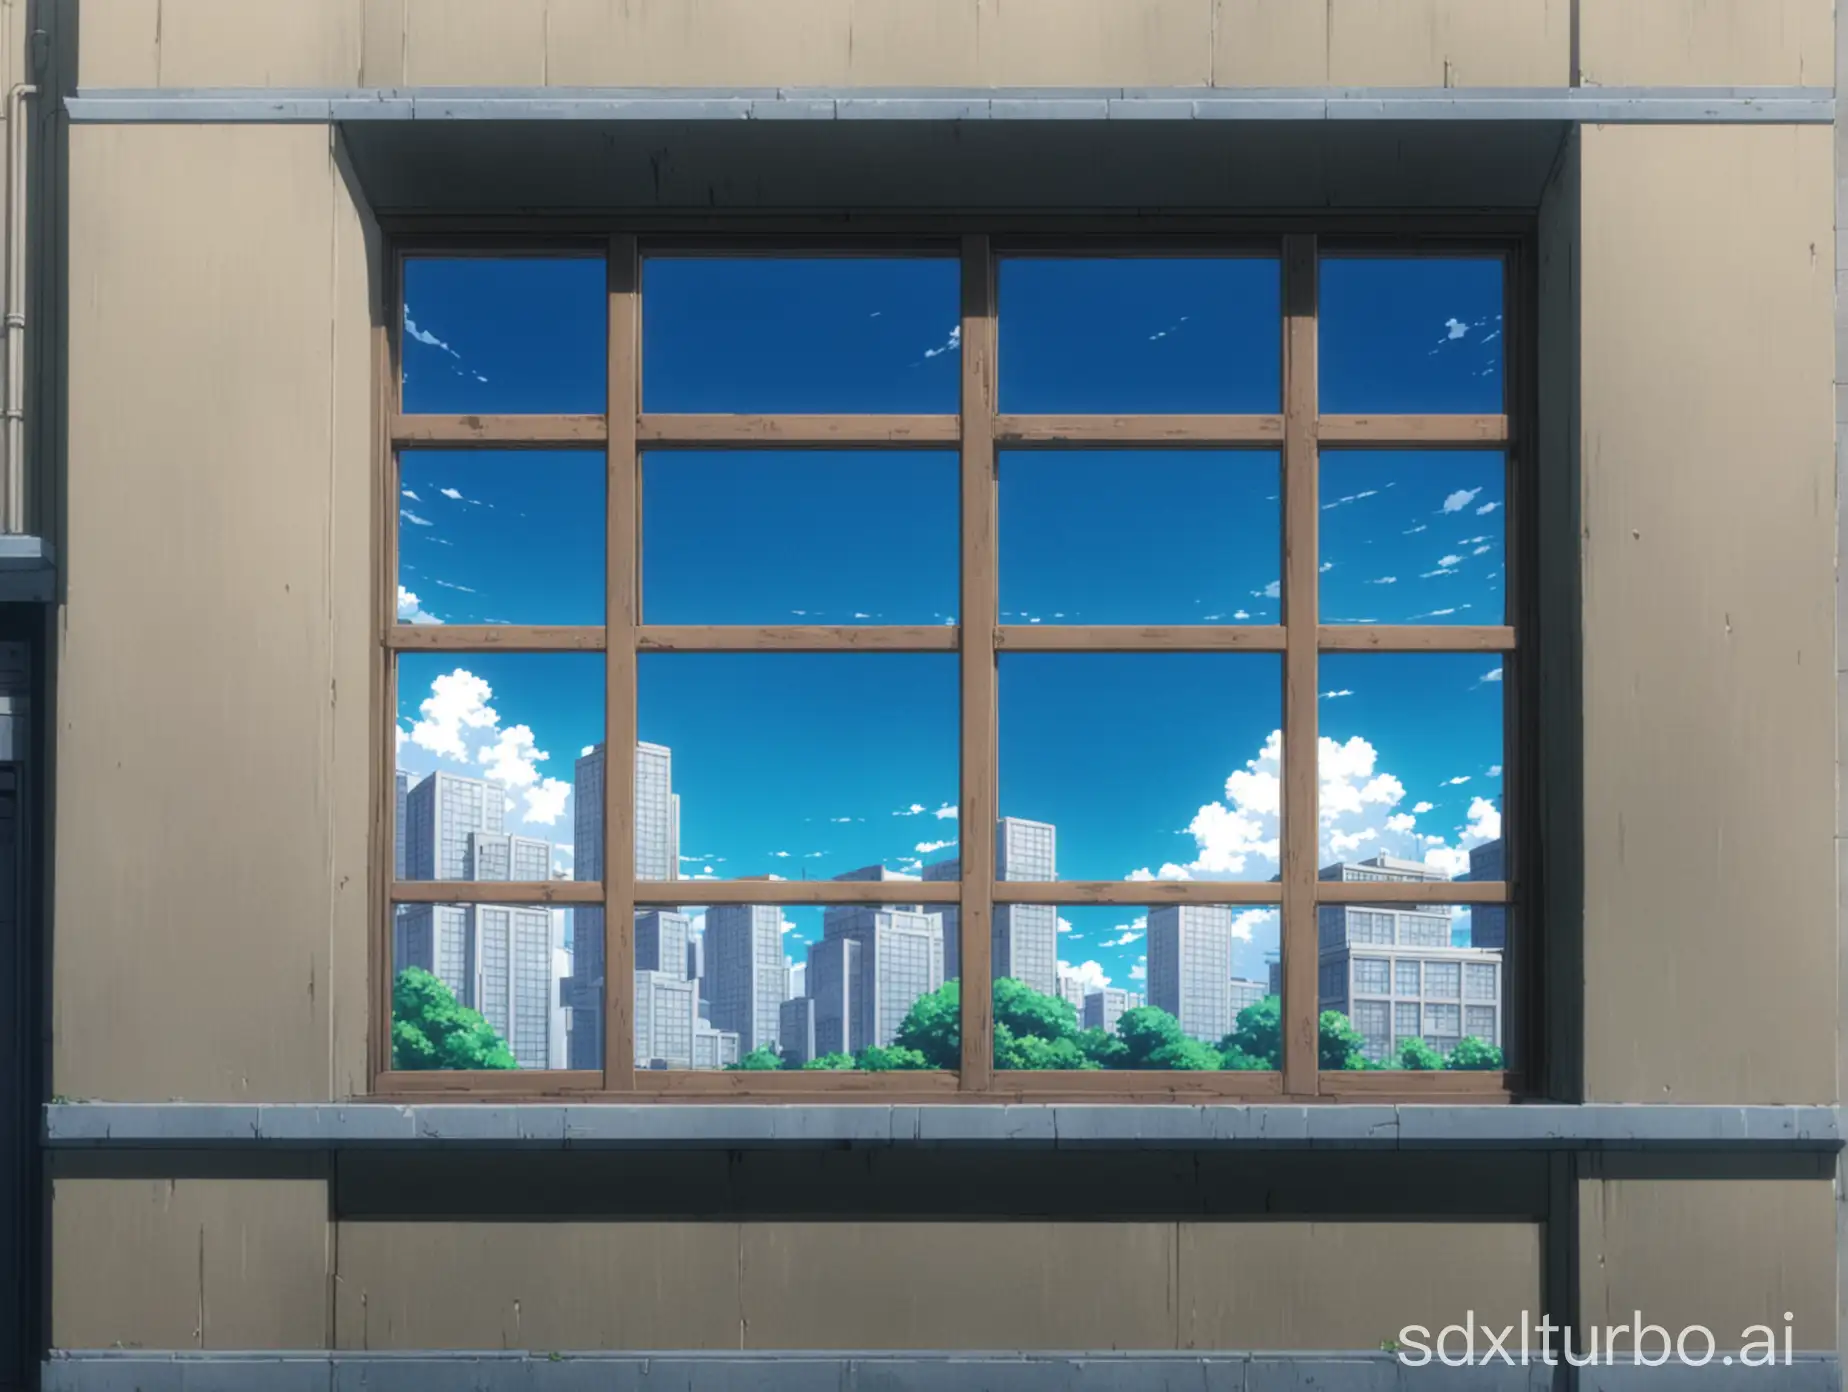 Urban-Anime-Cityscape-View-Through-a-Building-Window